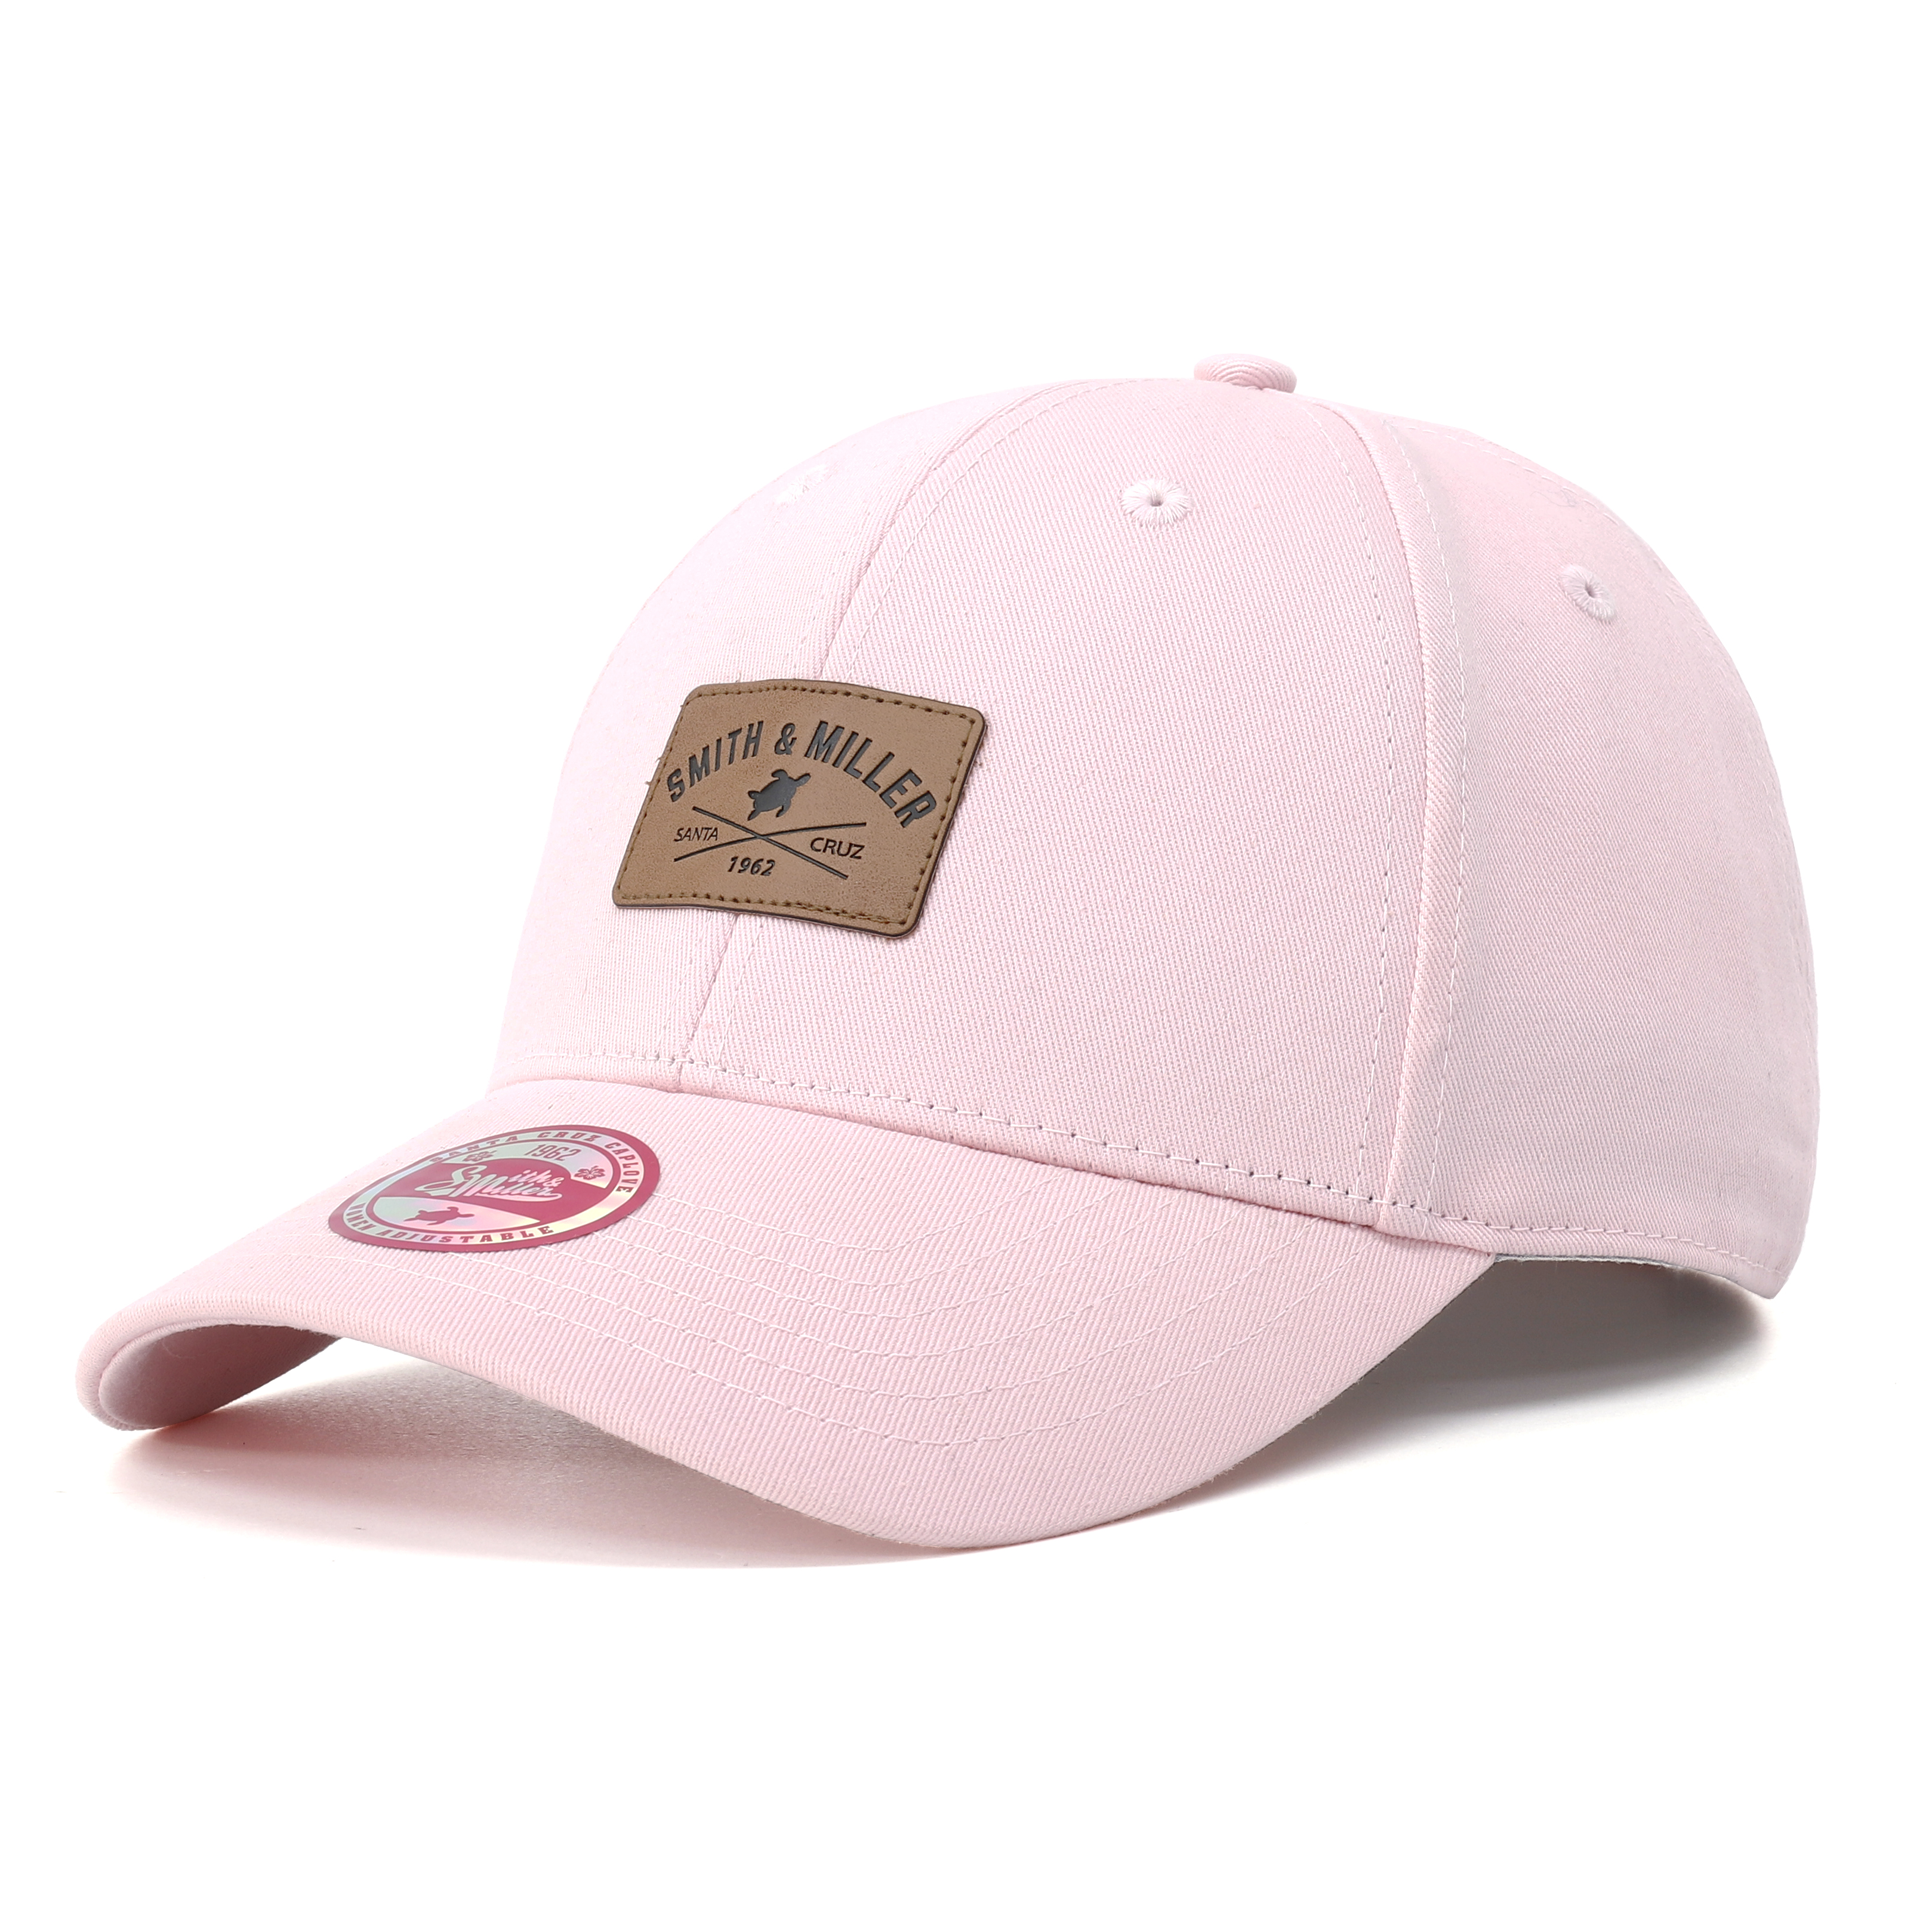 Smith & Miller Vina Women Curved Cap, light pink